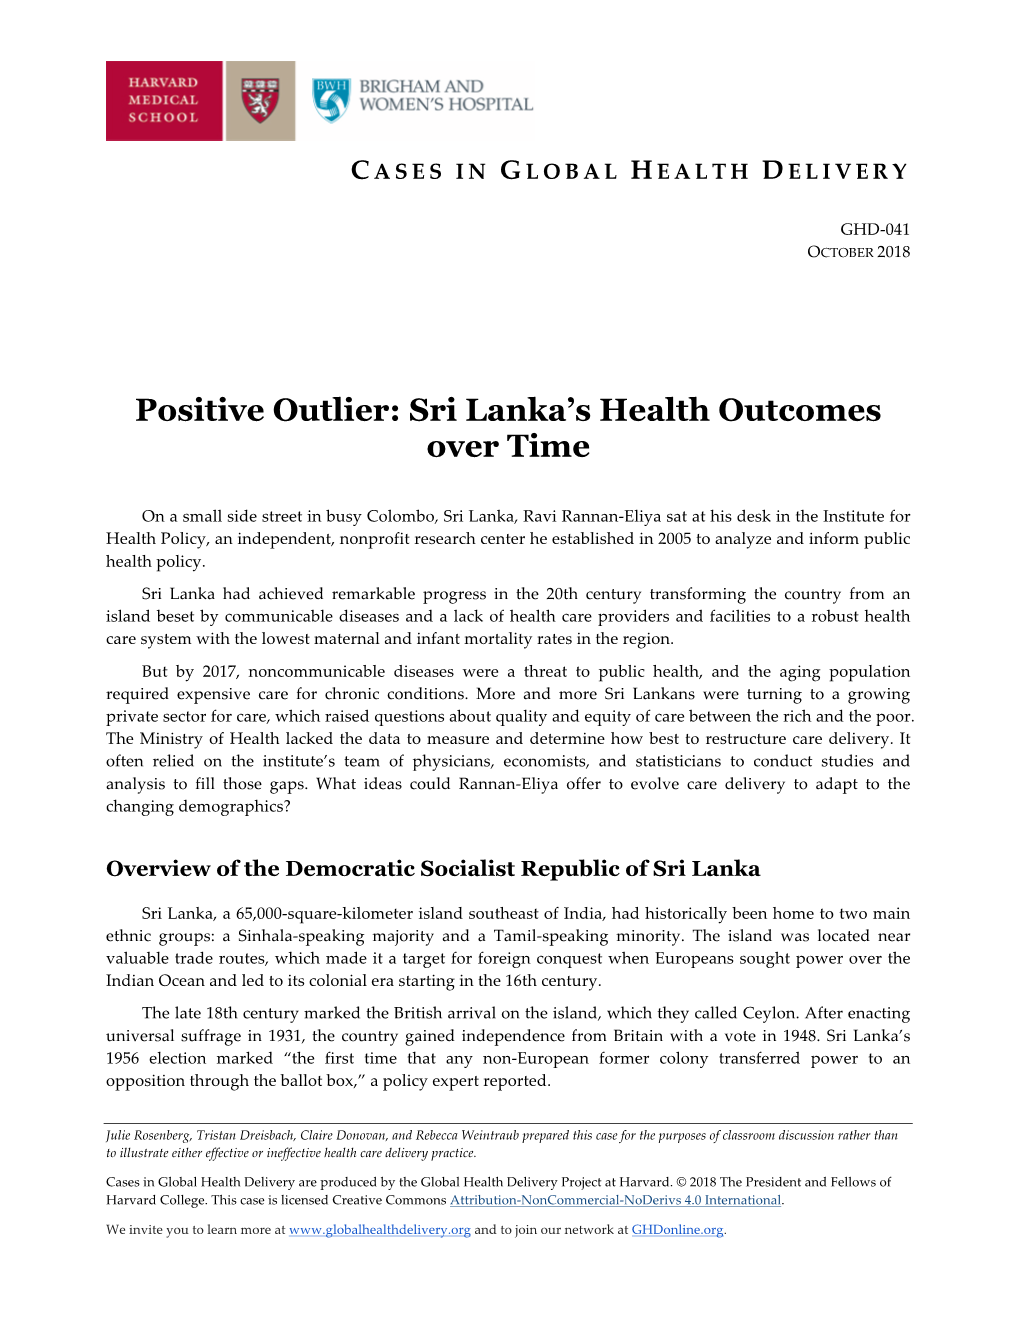 Positive Outlier: Sri Lanka's Health Outcomes Over Time